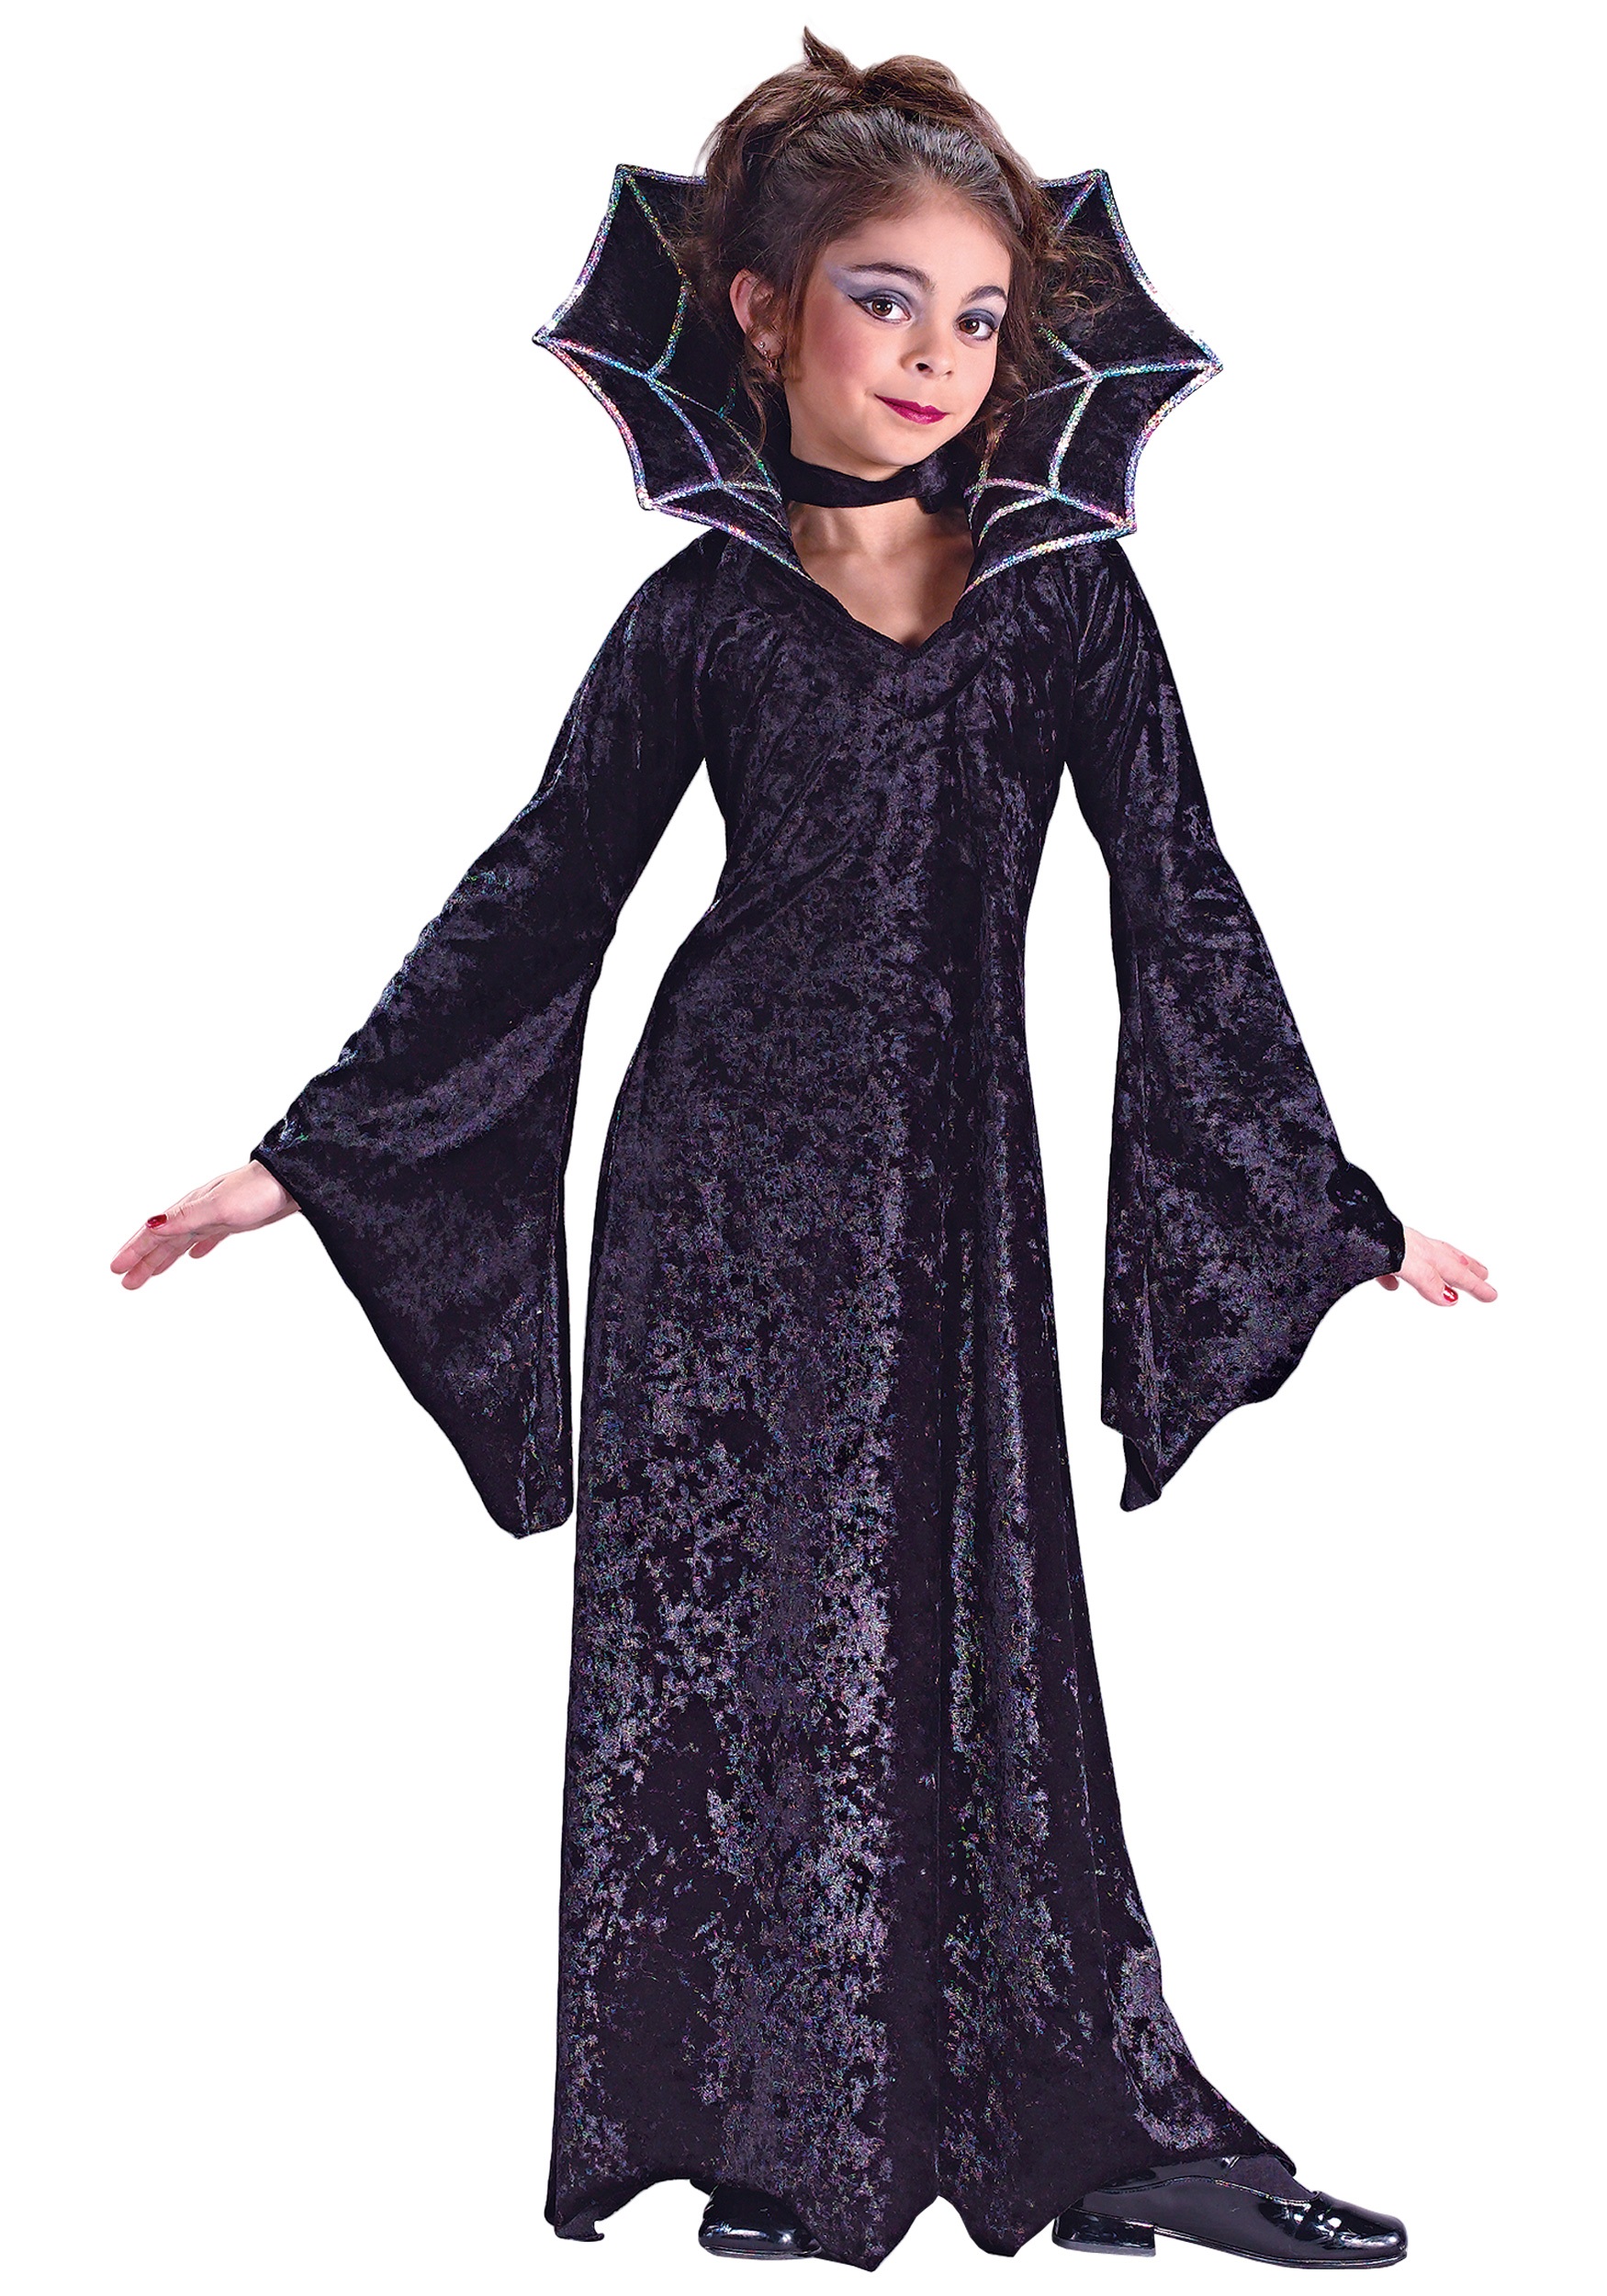 Photos - Fancy Dress Fun World Spiderella Costume for Girls Black FU5883